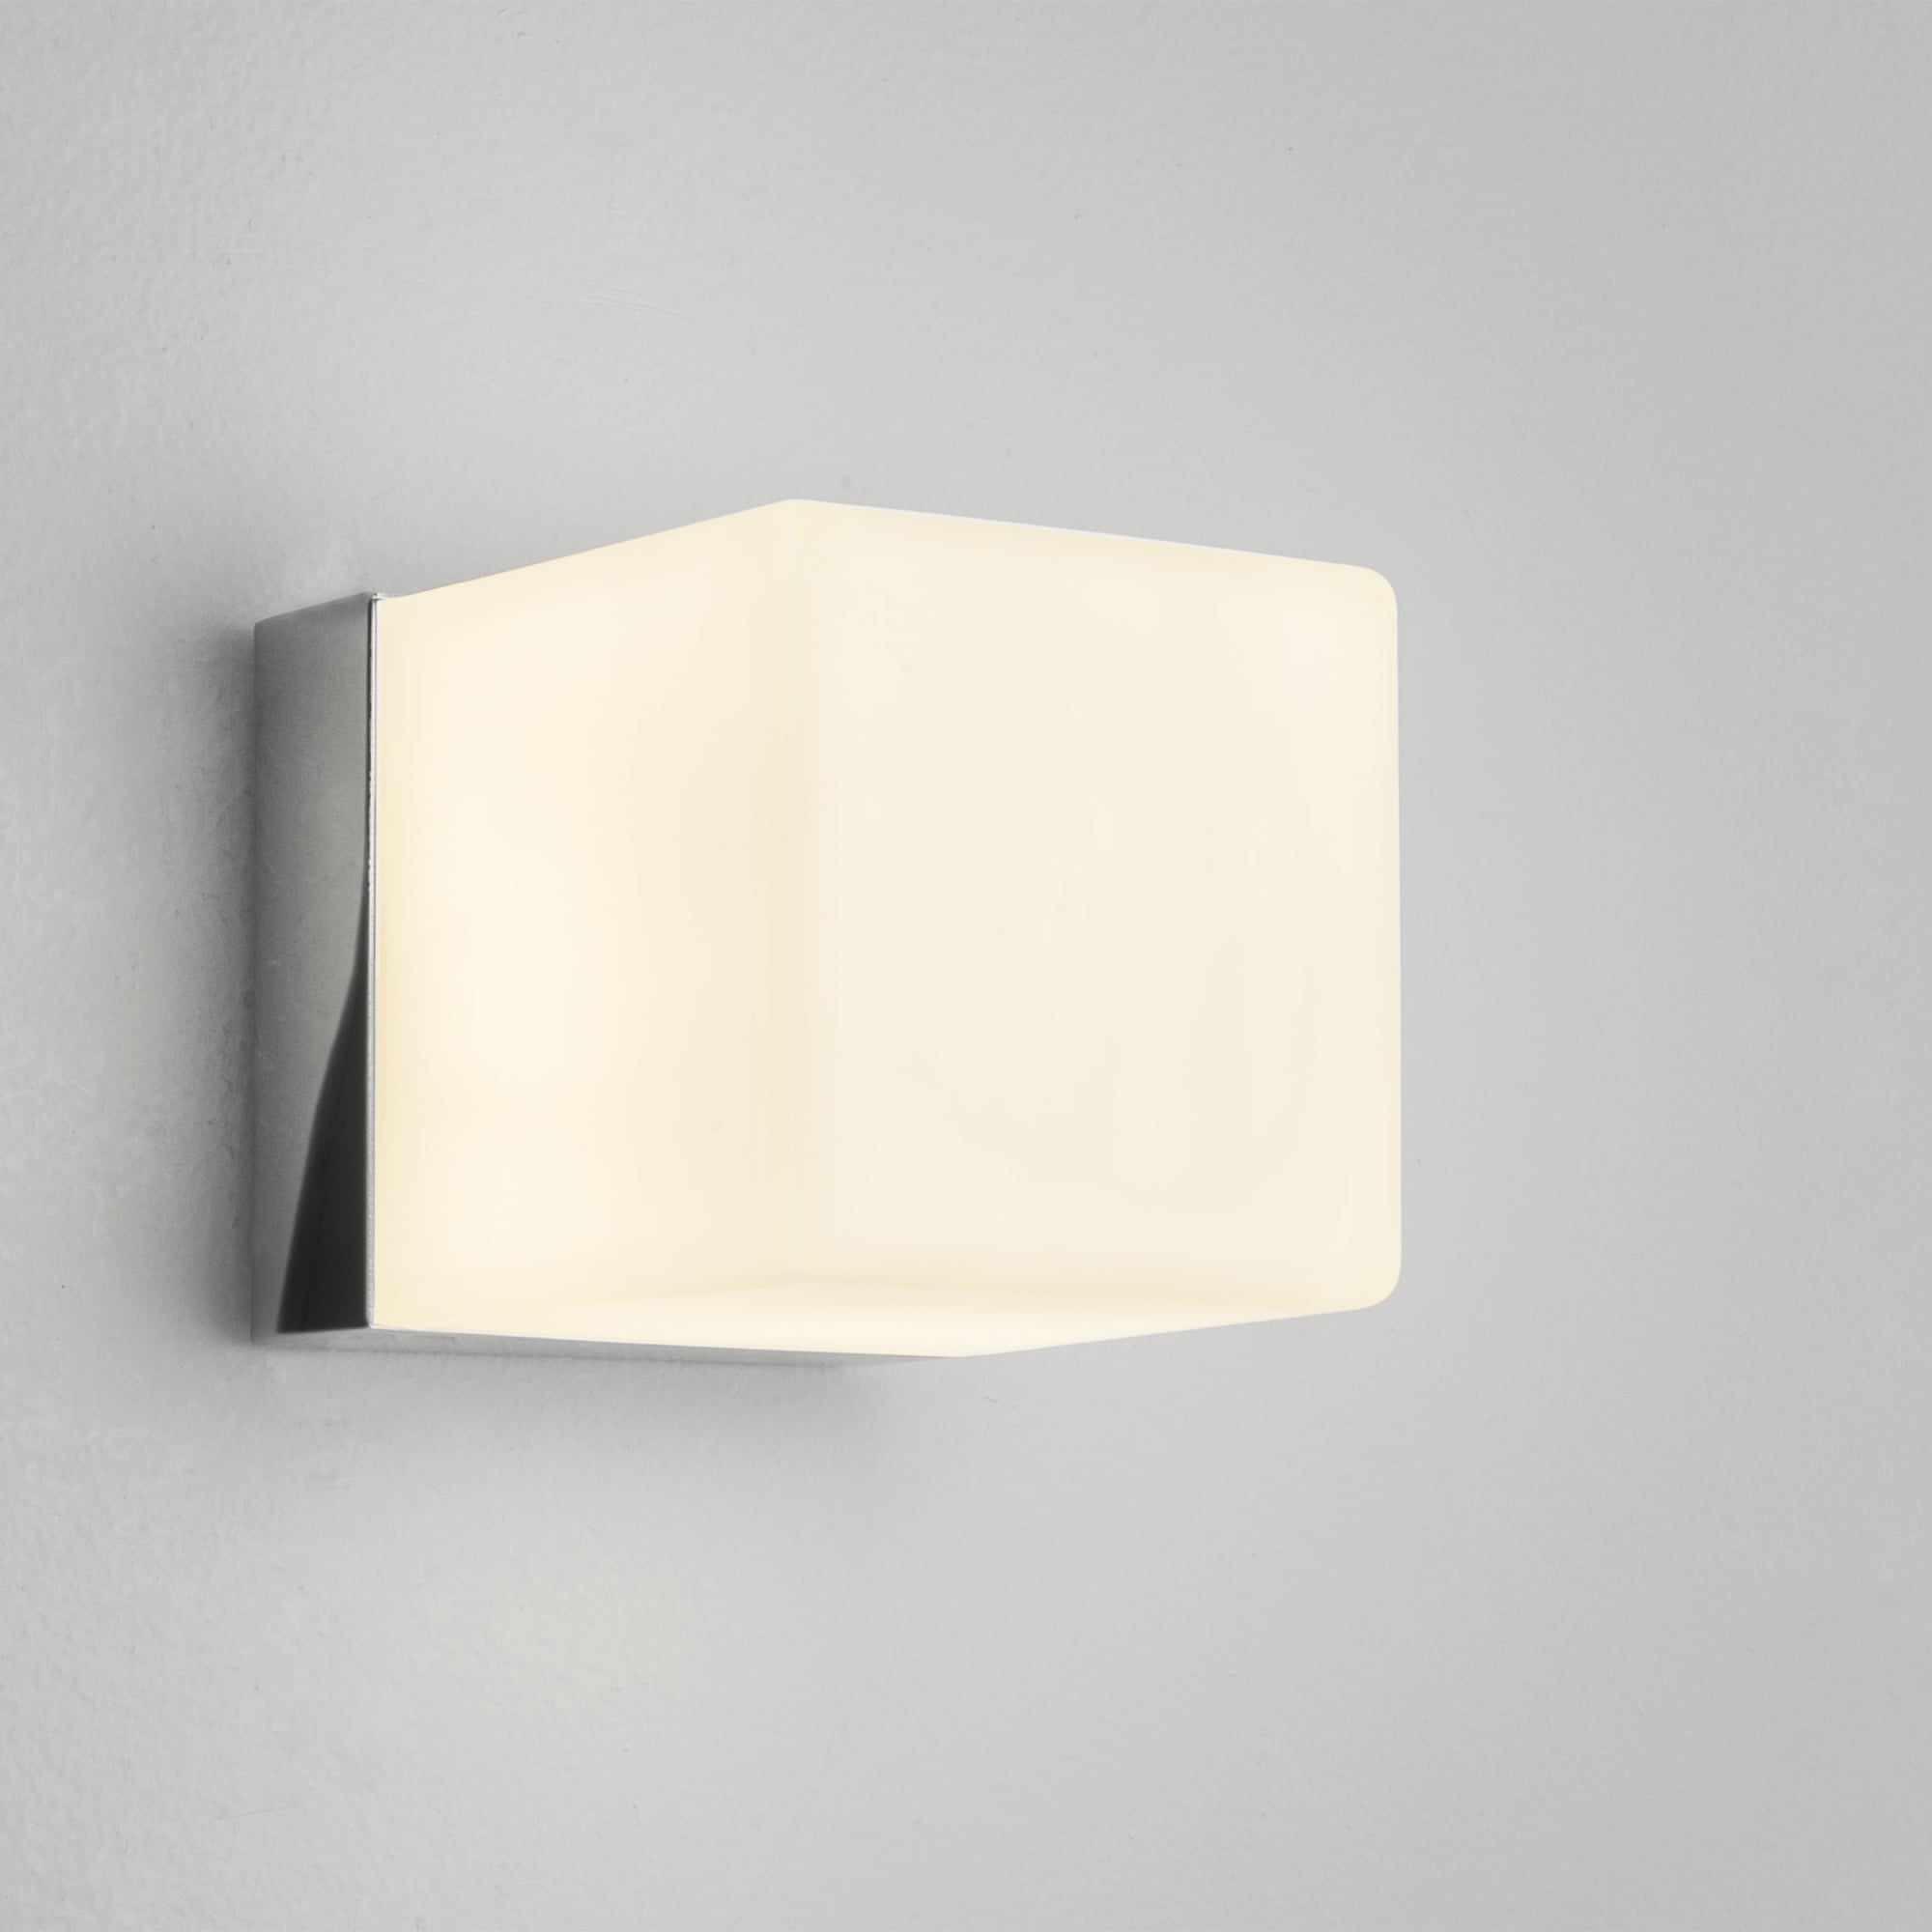 Cube Wall Light IP44 Bathroom